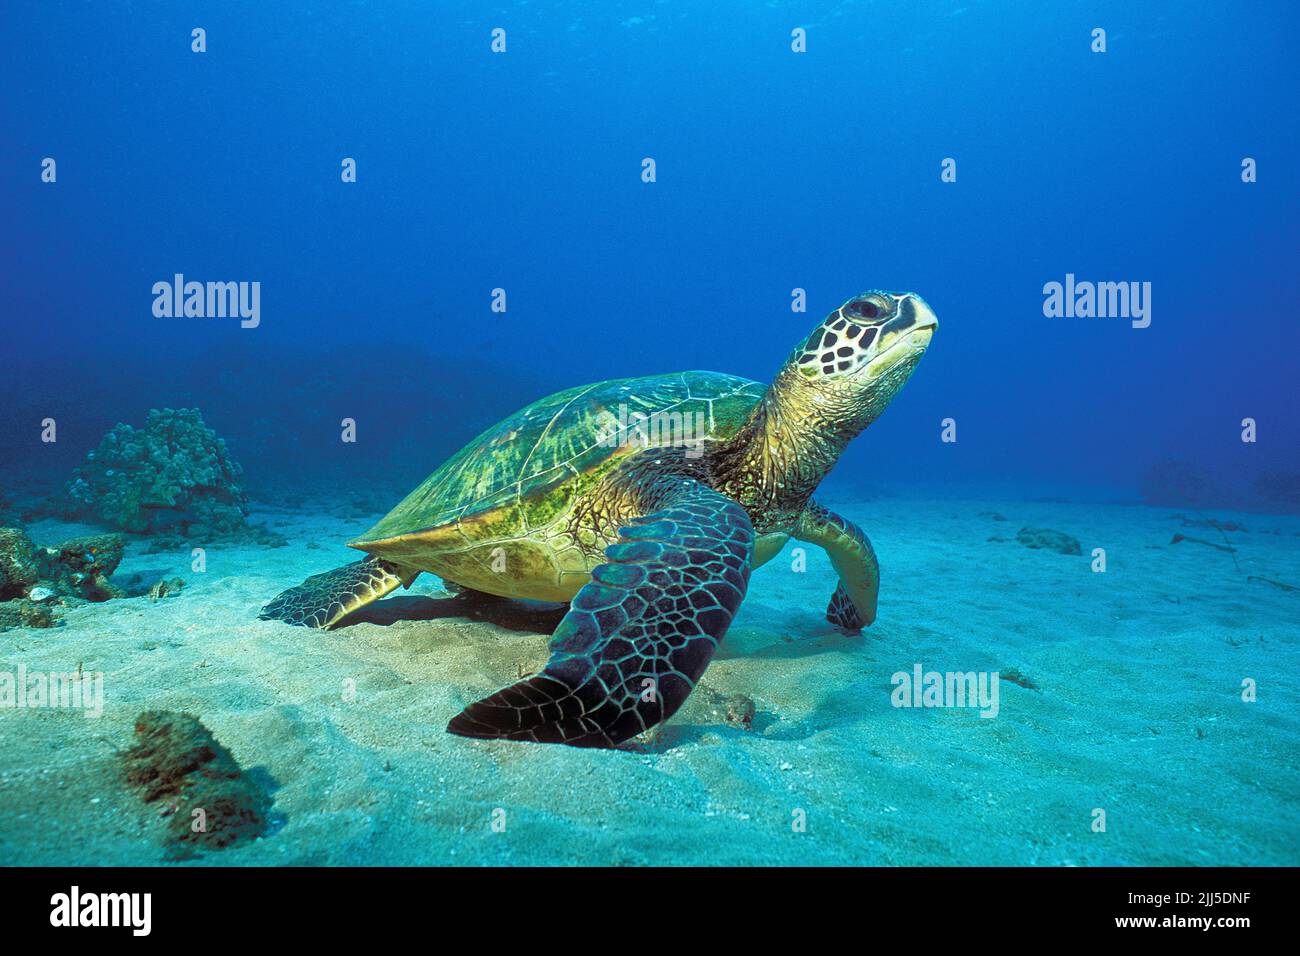 Green Sea Turtle (Chelonia mydas), on sandy seabed, Maui, Hawaii, Pacific Ocean Stock Photo